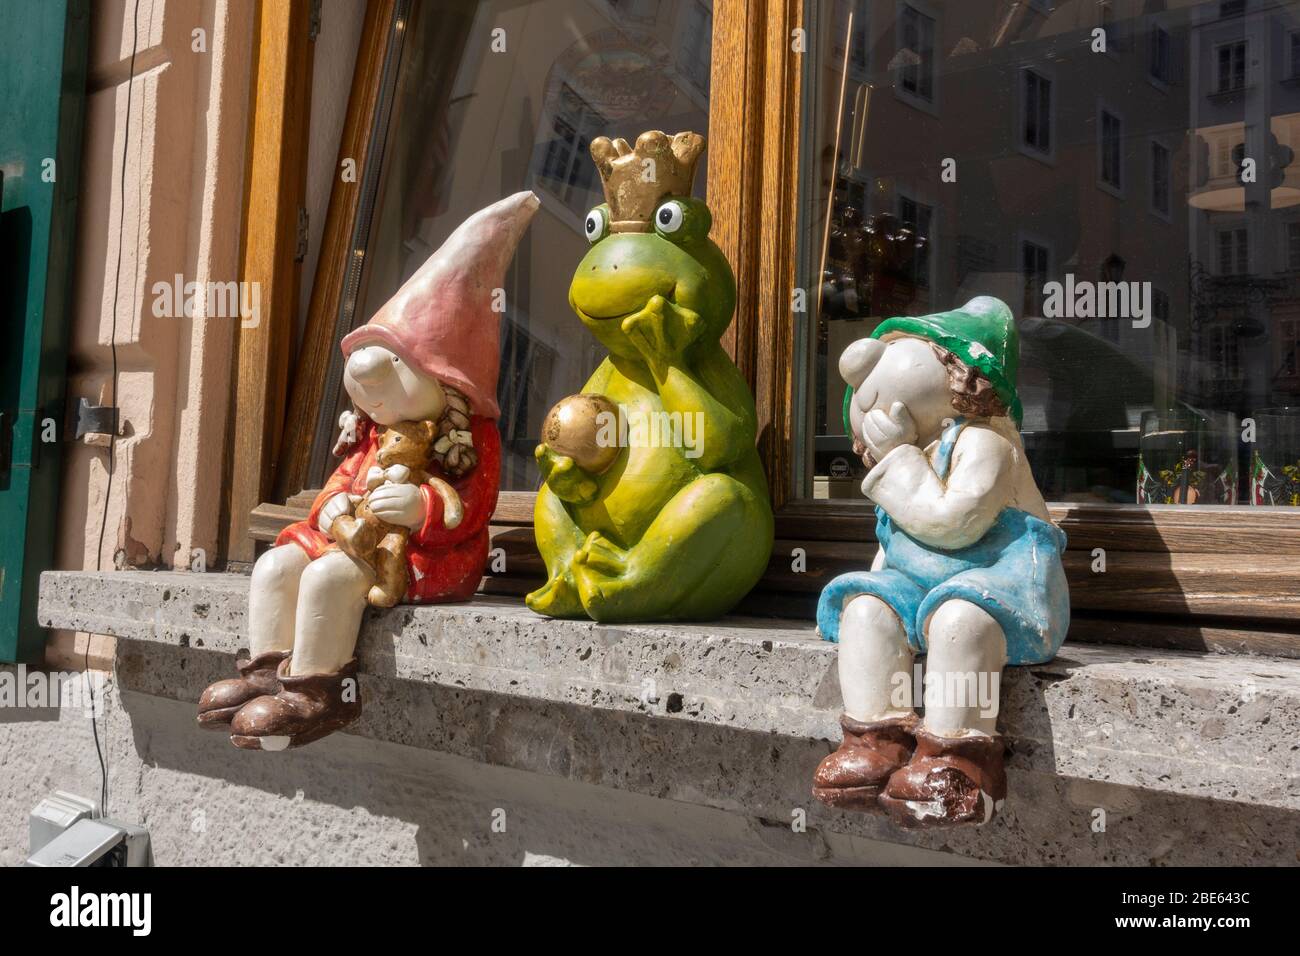 Cute window display of garden ornaments on a shop window ledge in Salzburg, Austria. Stock Photo